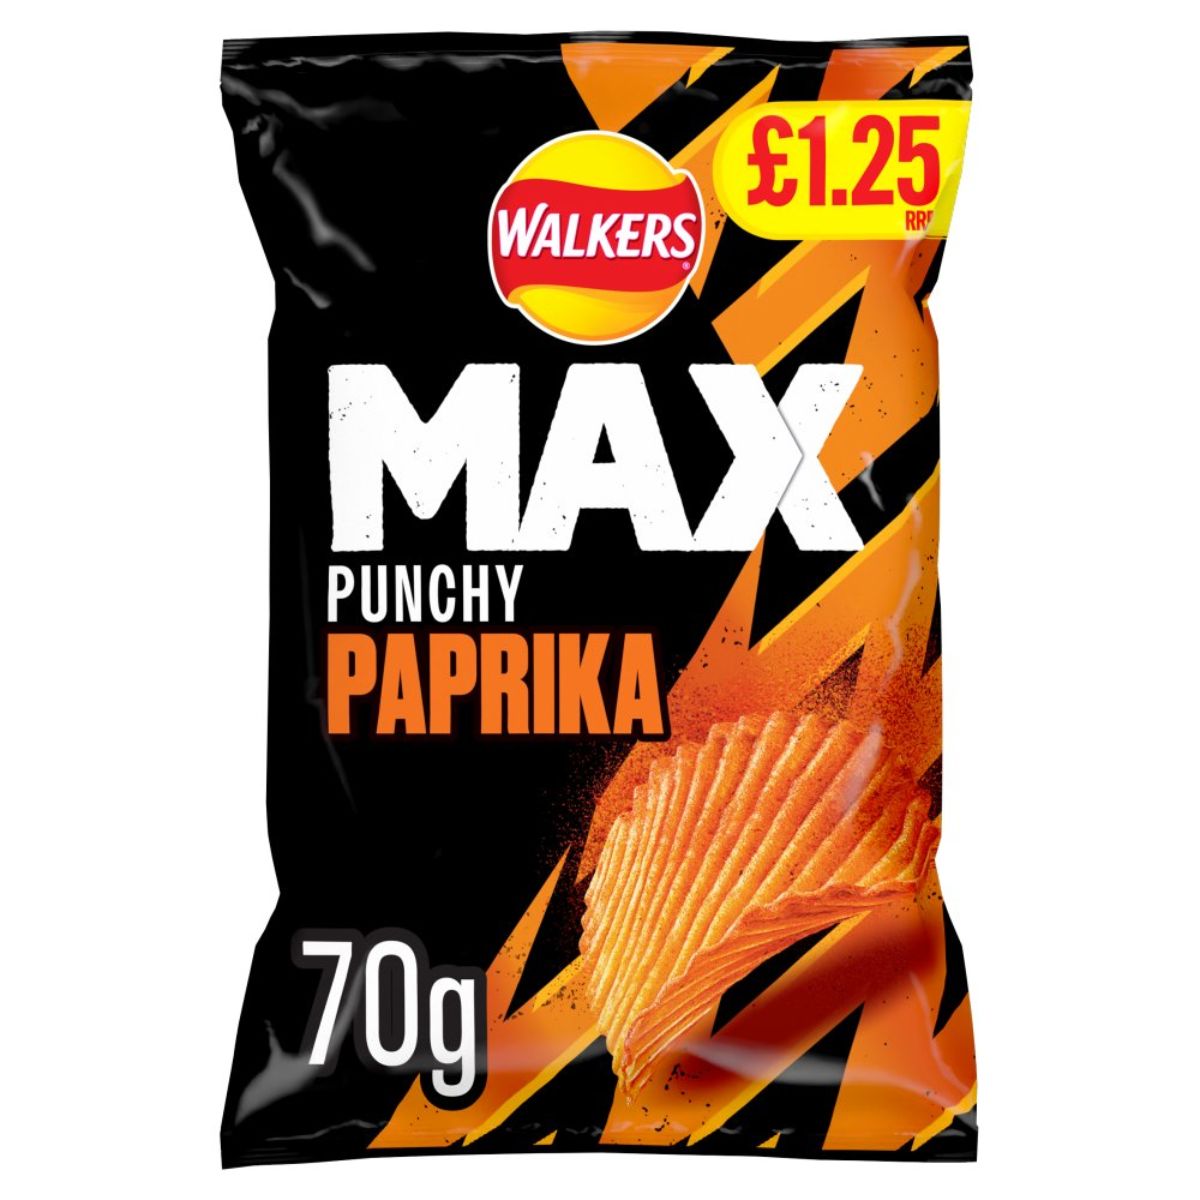 Walkers - Max Punchy Paprika - 70g.